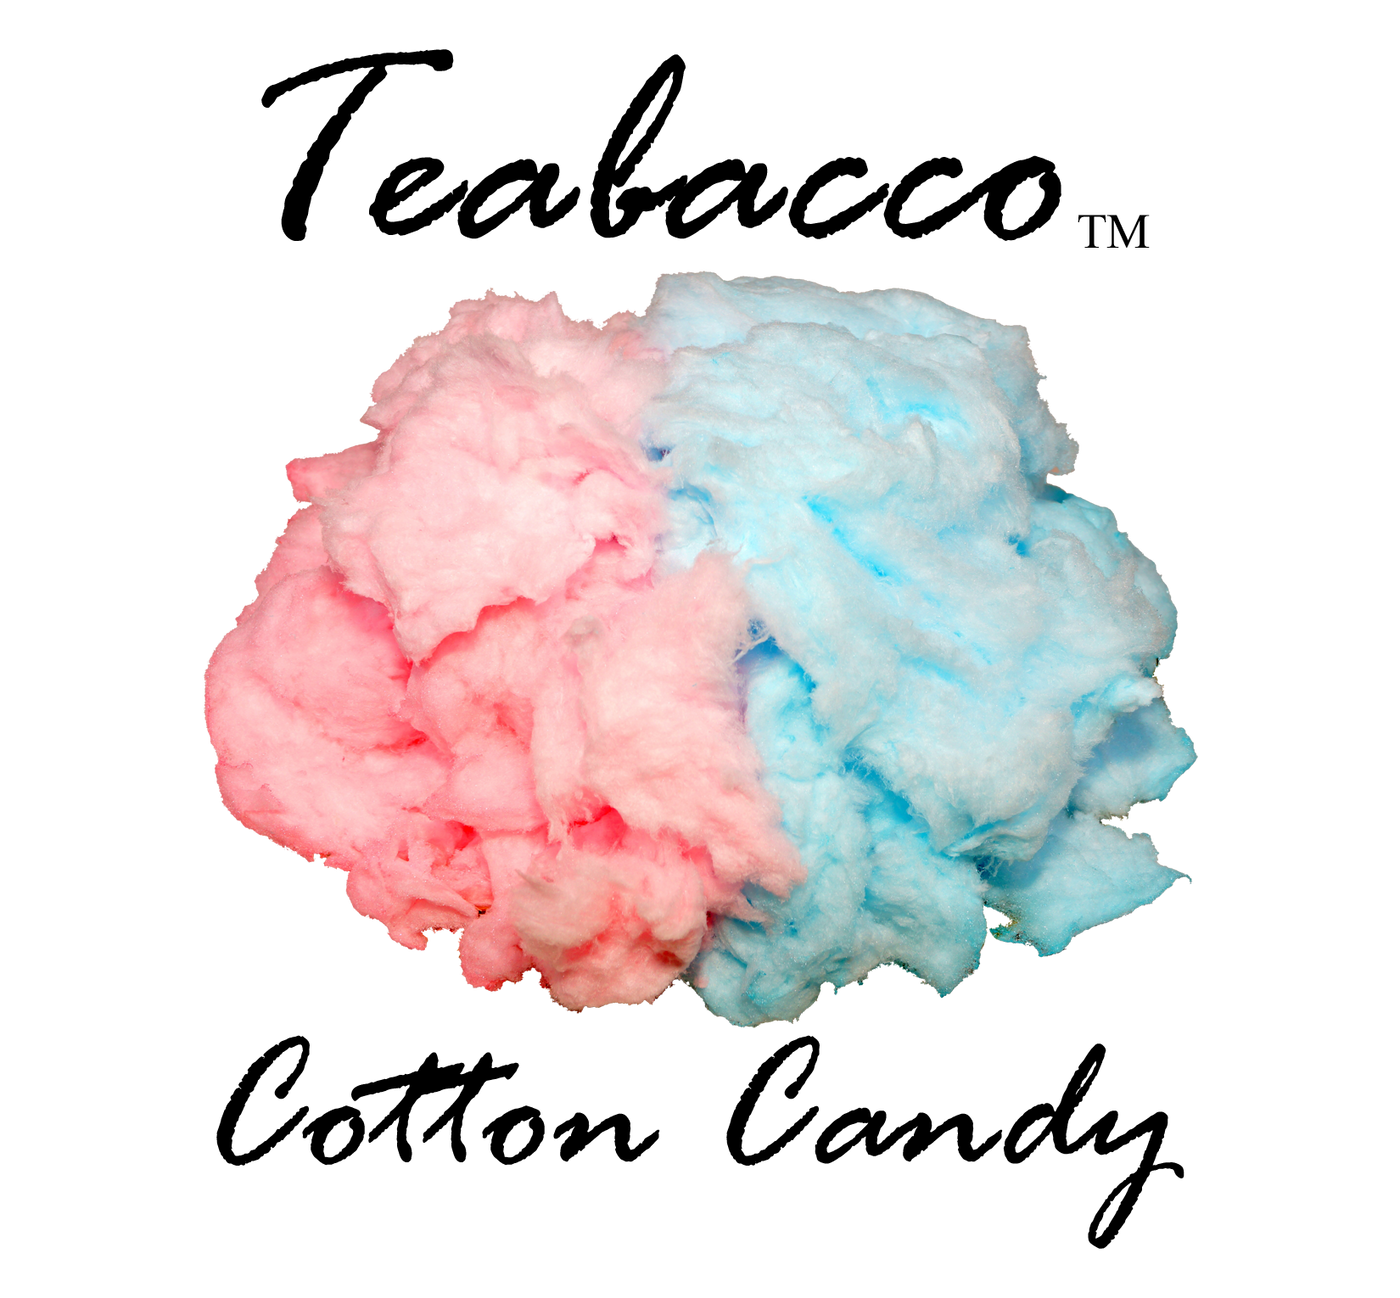 Cotton candy cloud - Impossible Images - Unique stock images for